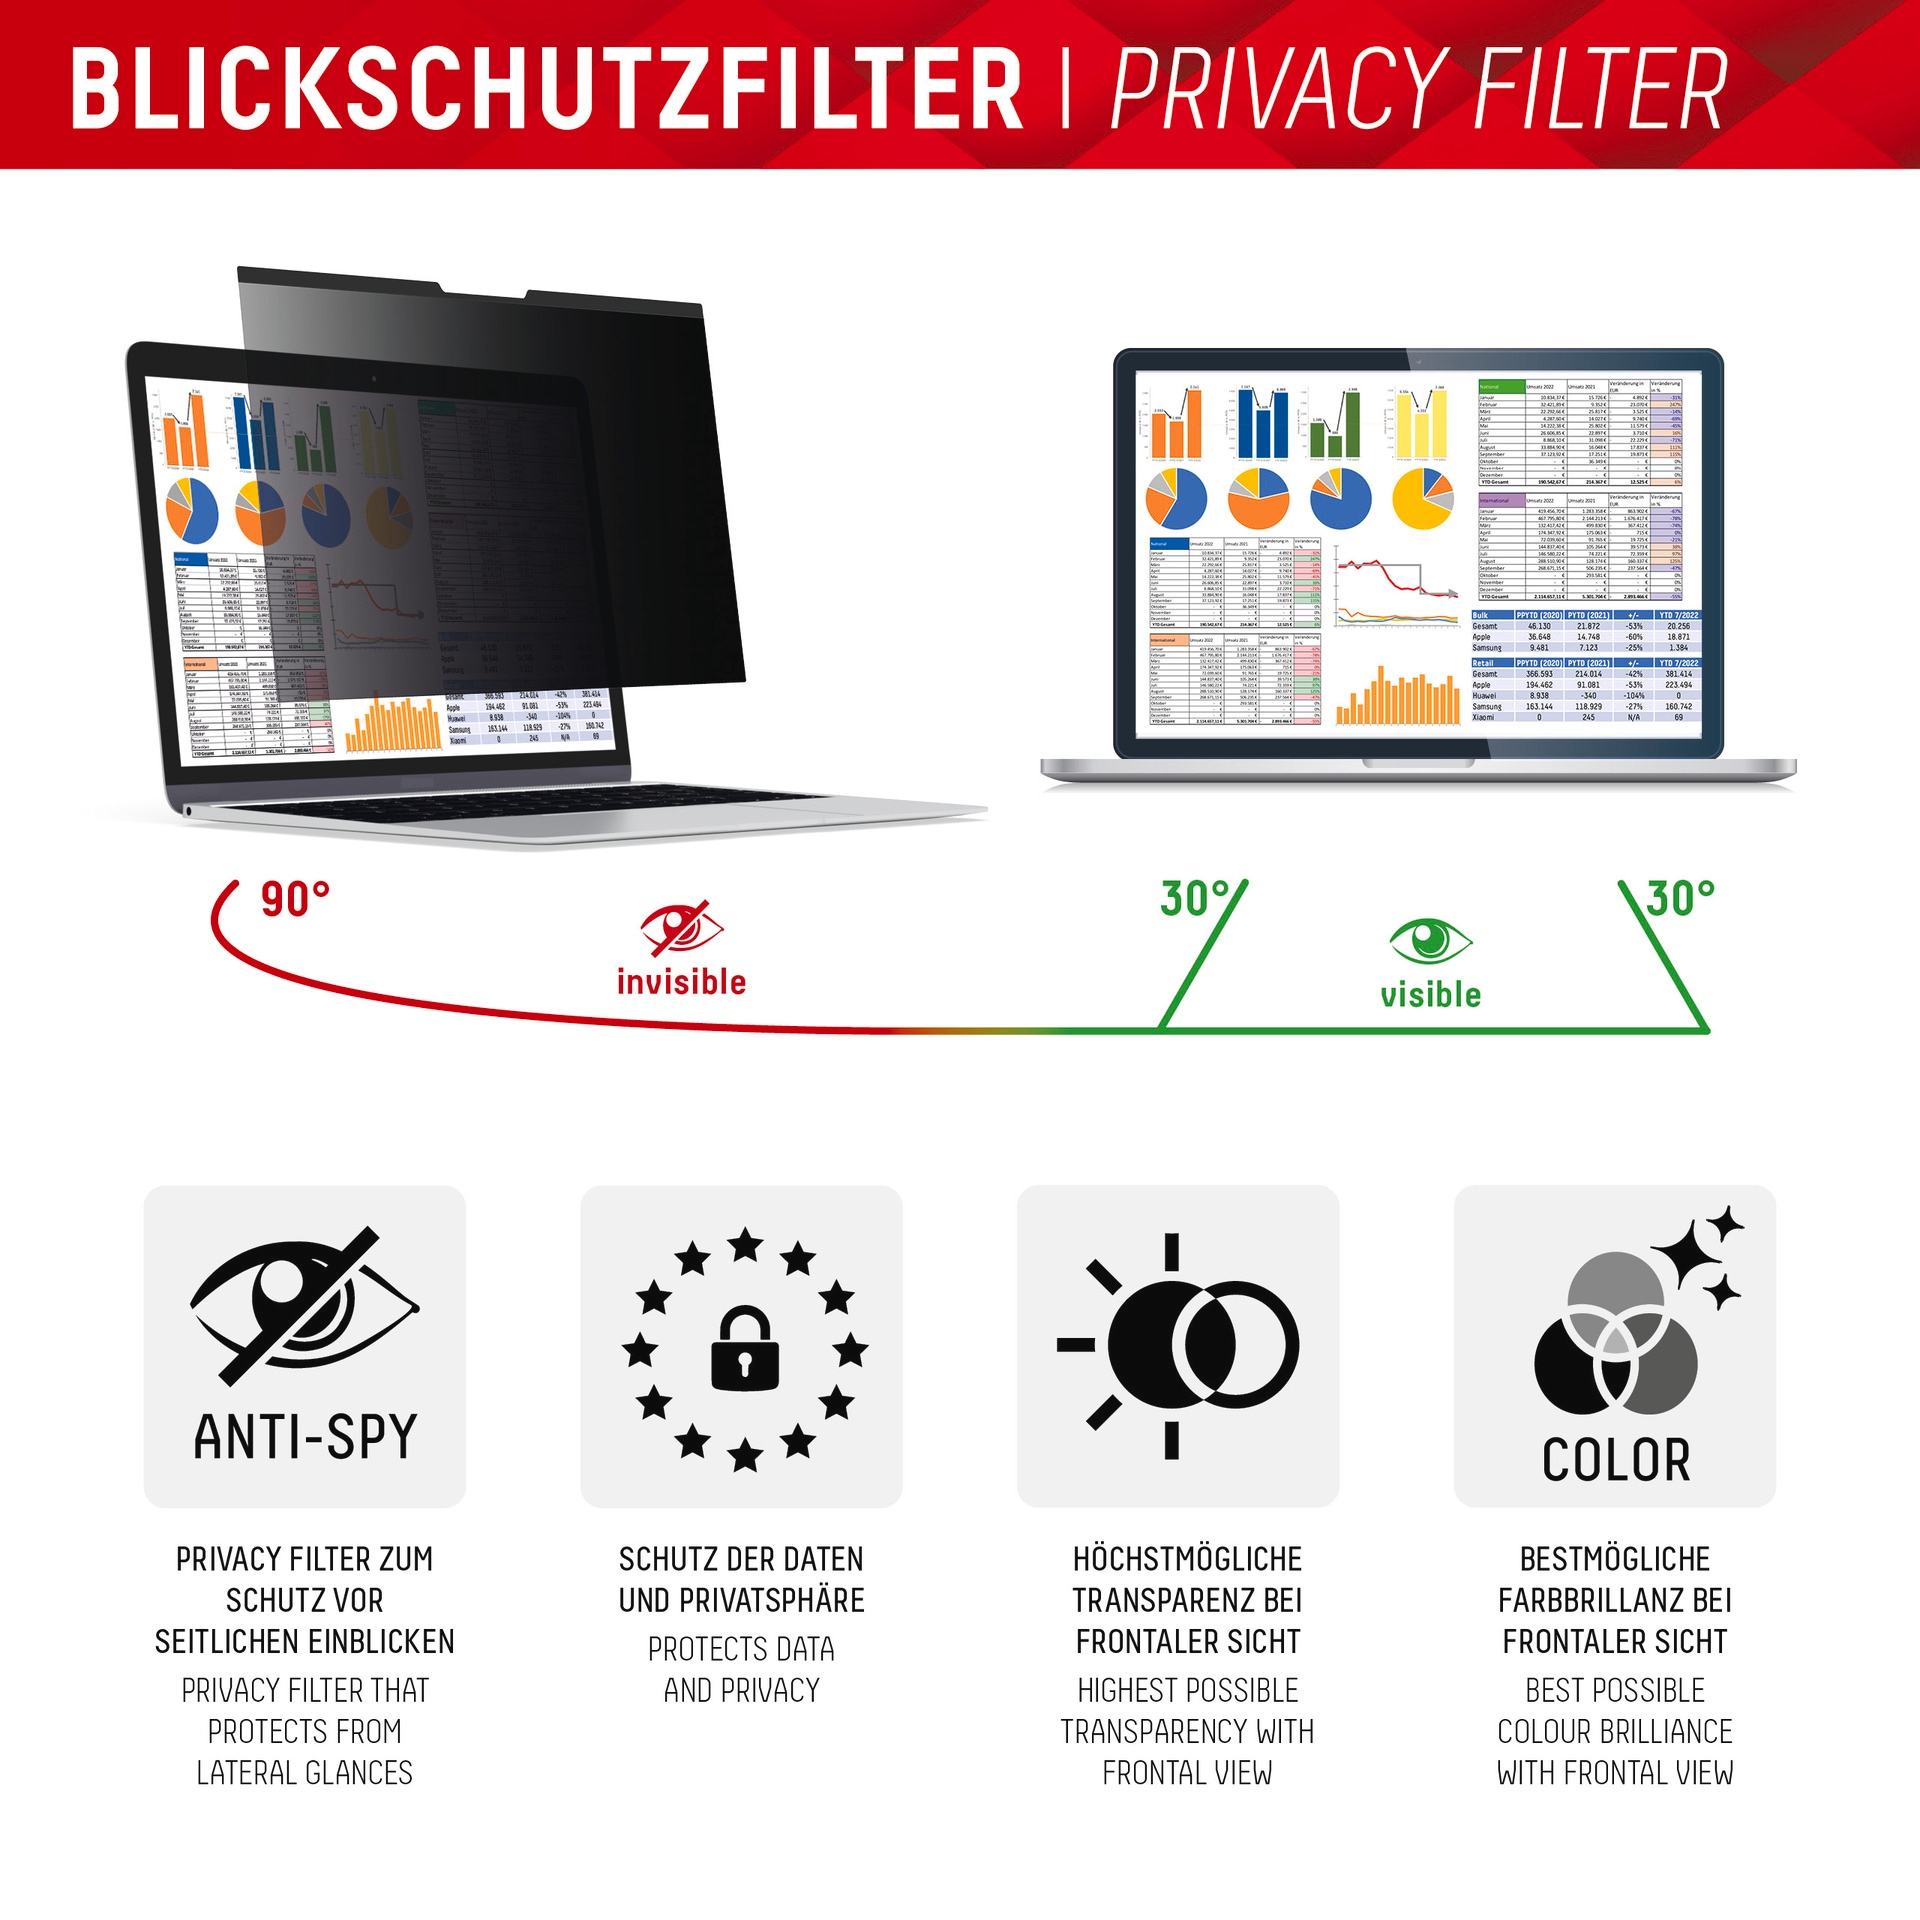 Displex Displayschutzfolie »Privacy Safe - MacBook Air/Pro 13,3«, Blickschutzfilter